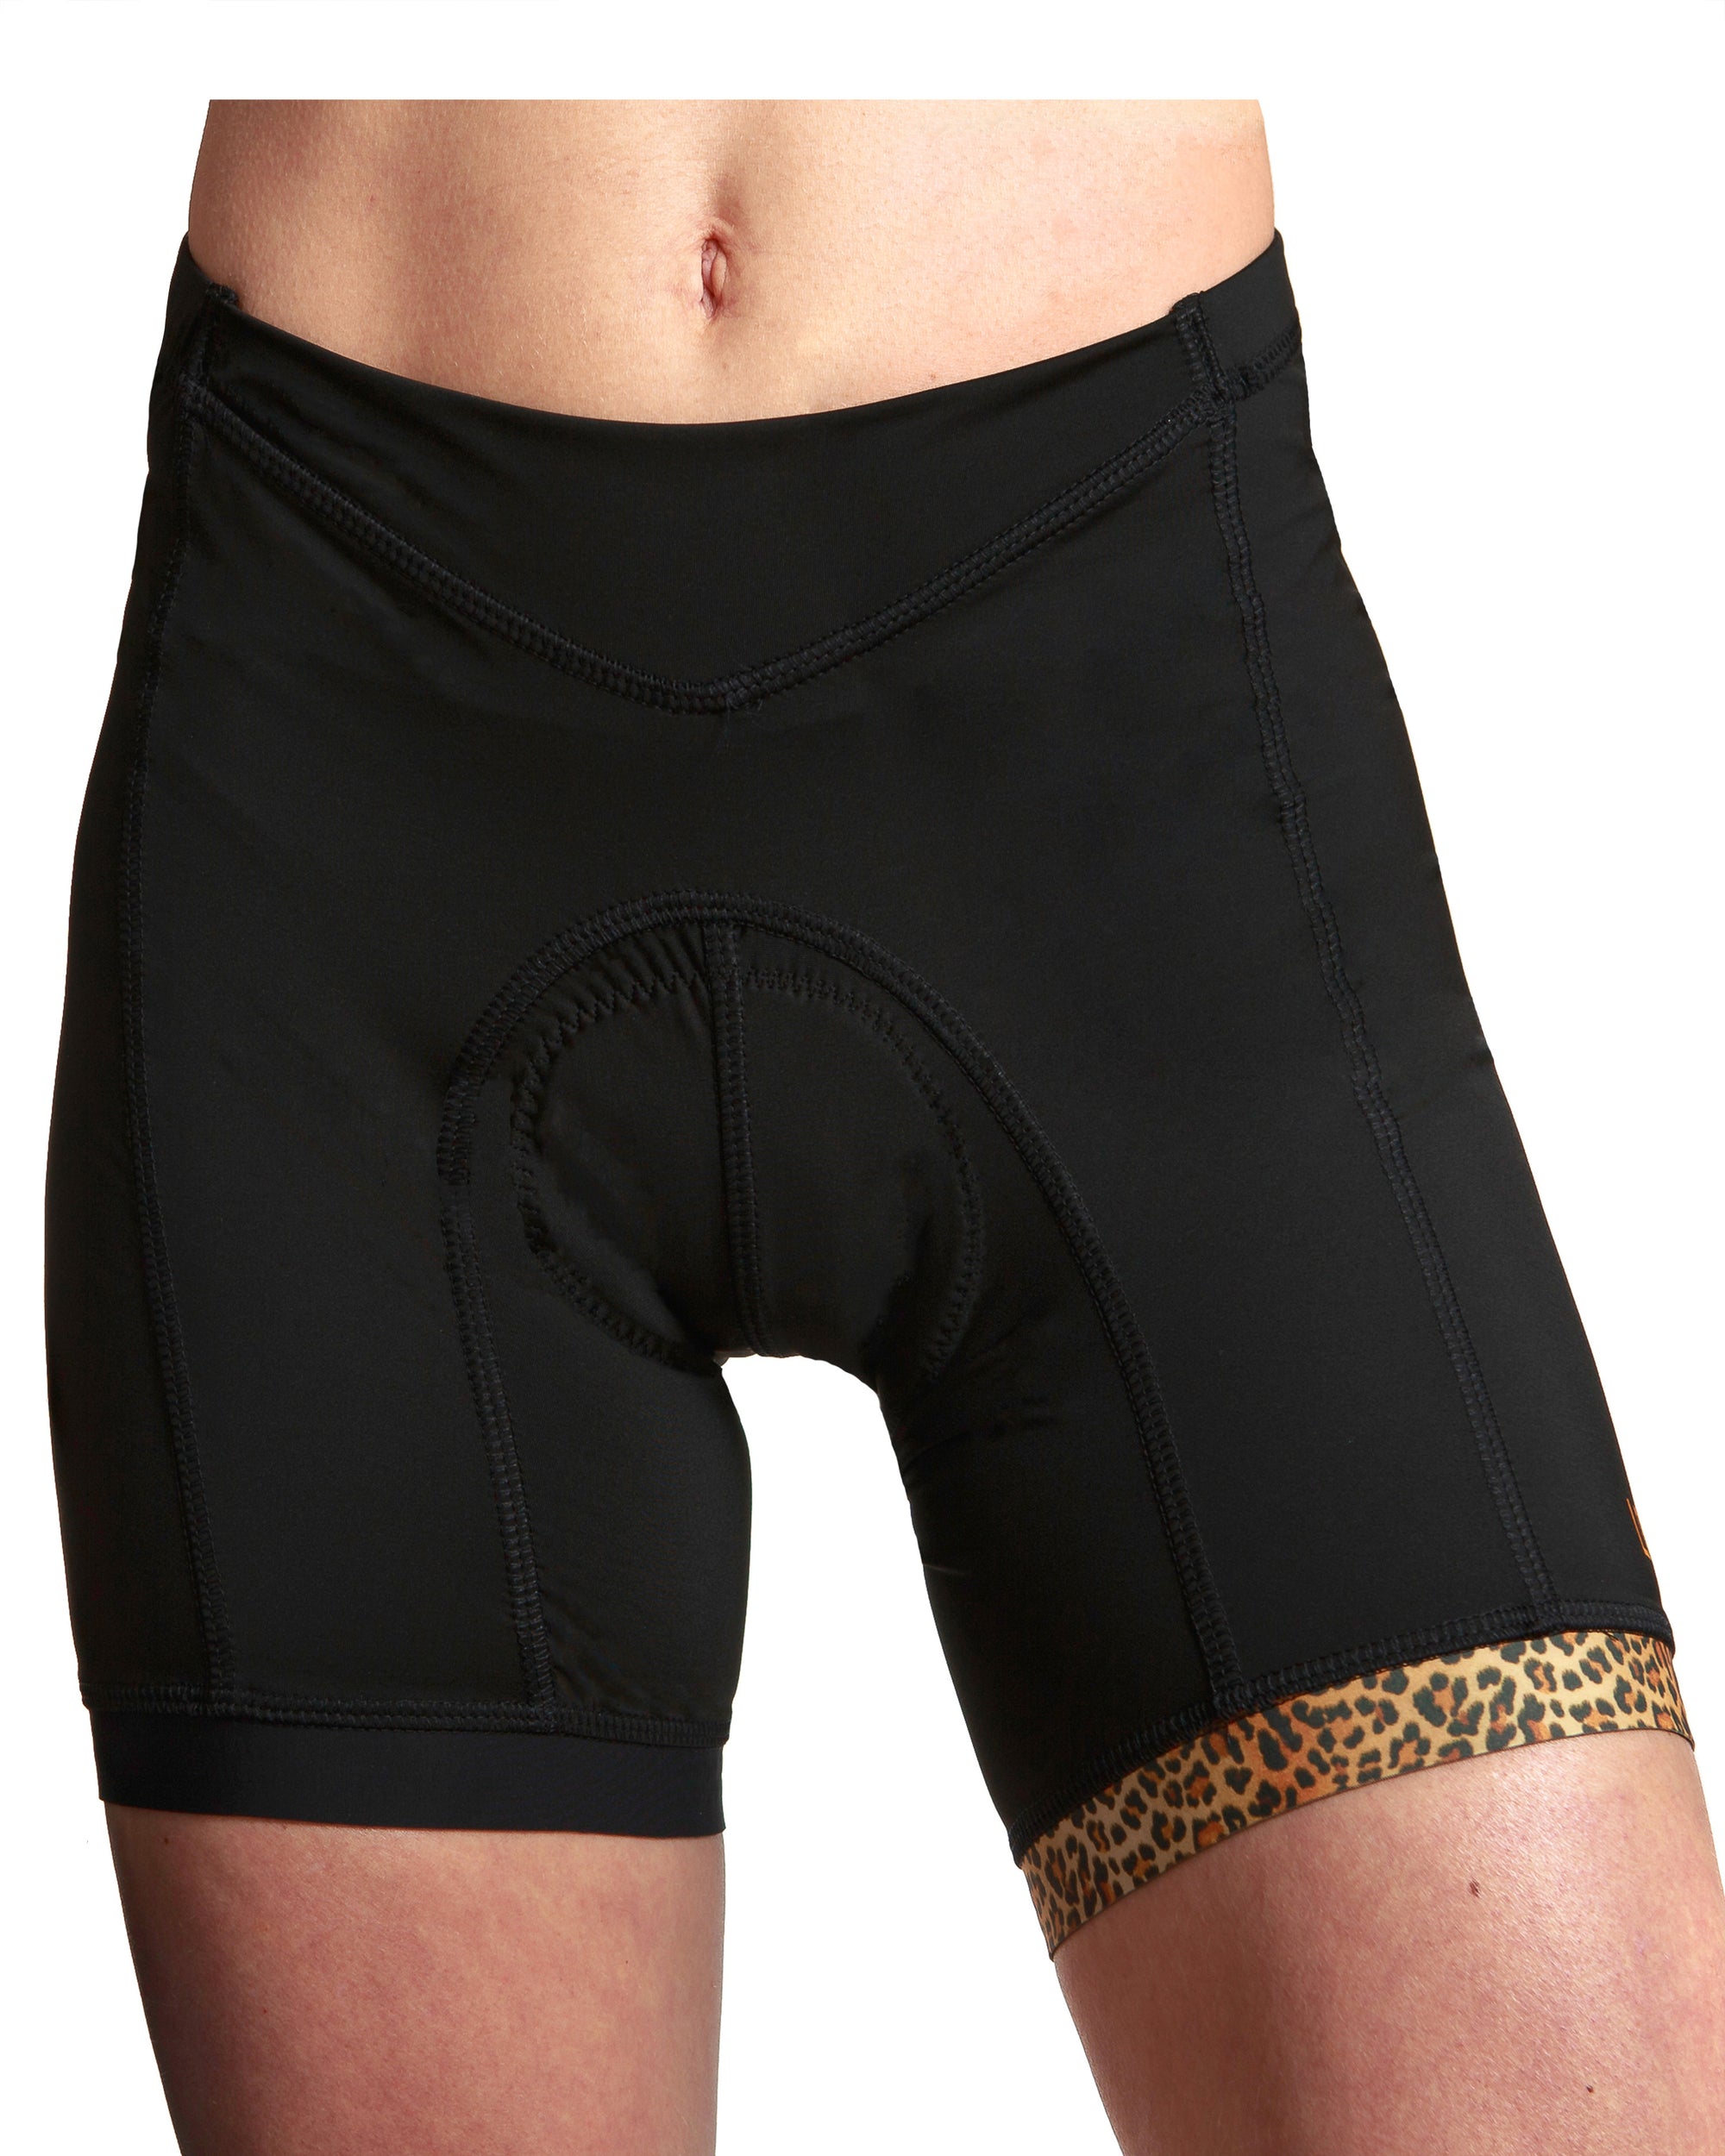 Women's cycling pants - Black - Ergonomically designed padded bike